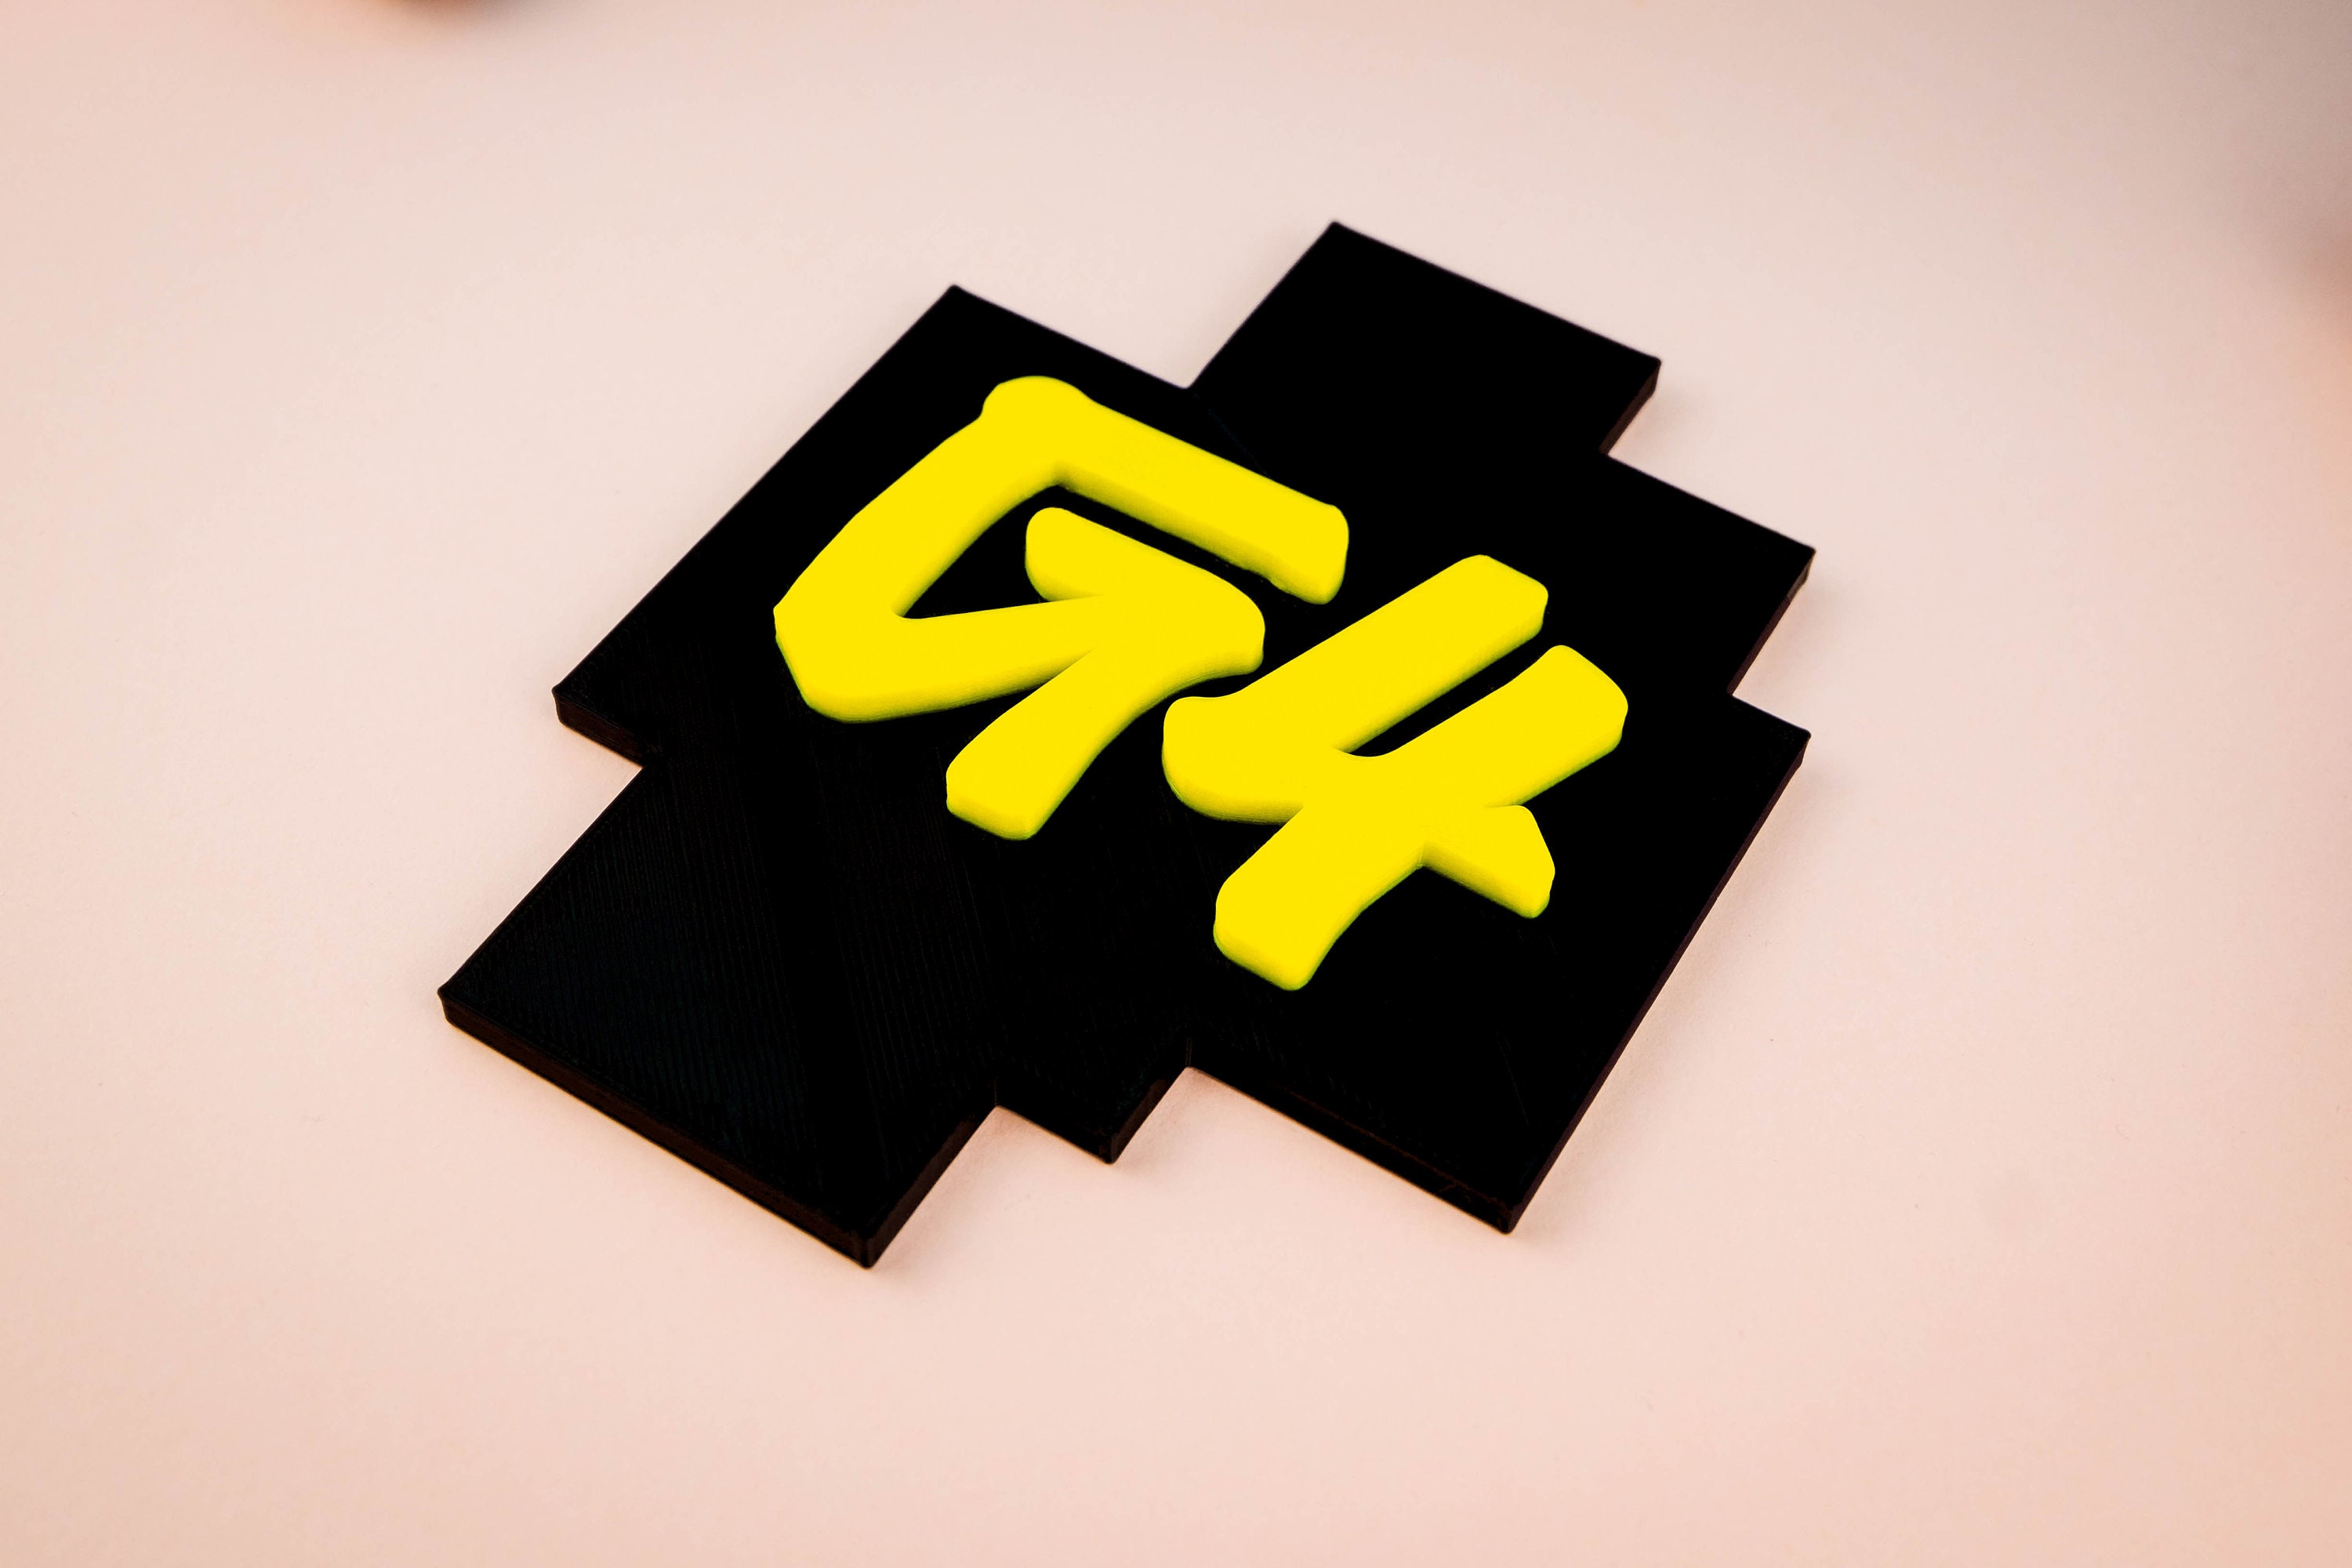 TVOKIDS Logo 3D Printed Letters Pretend Play Kids Toy Gift Preschool  Learning 3D